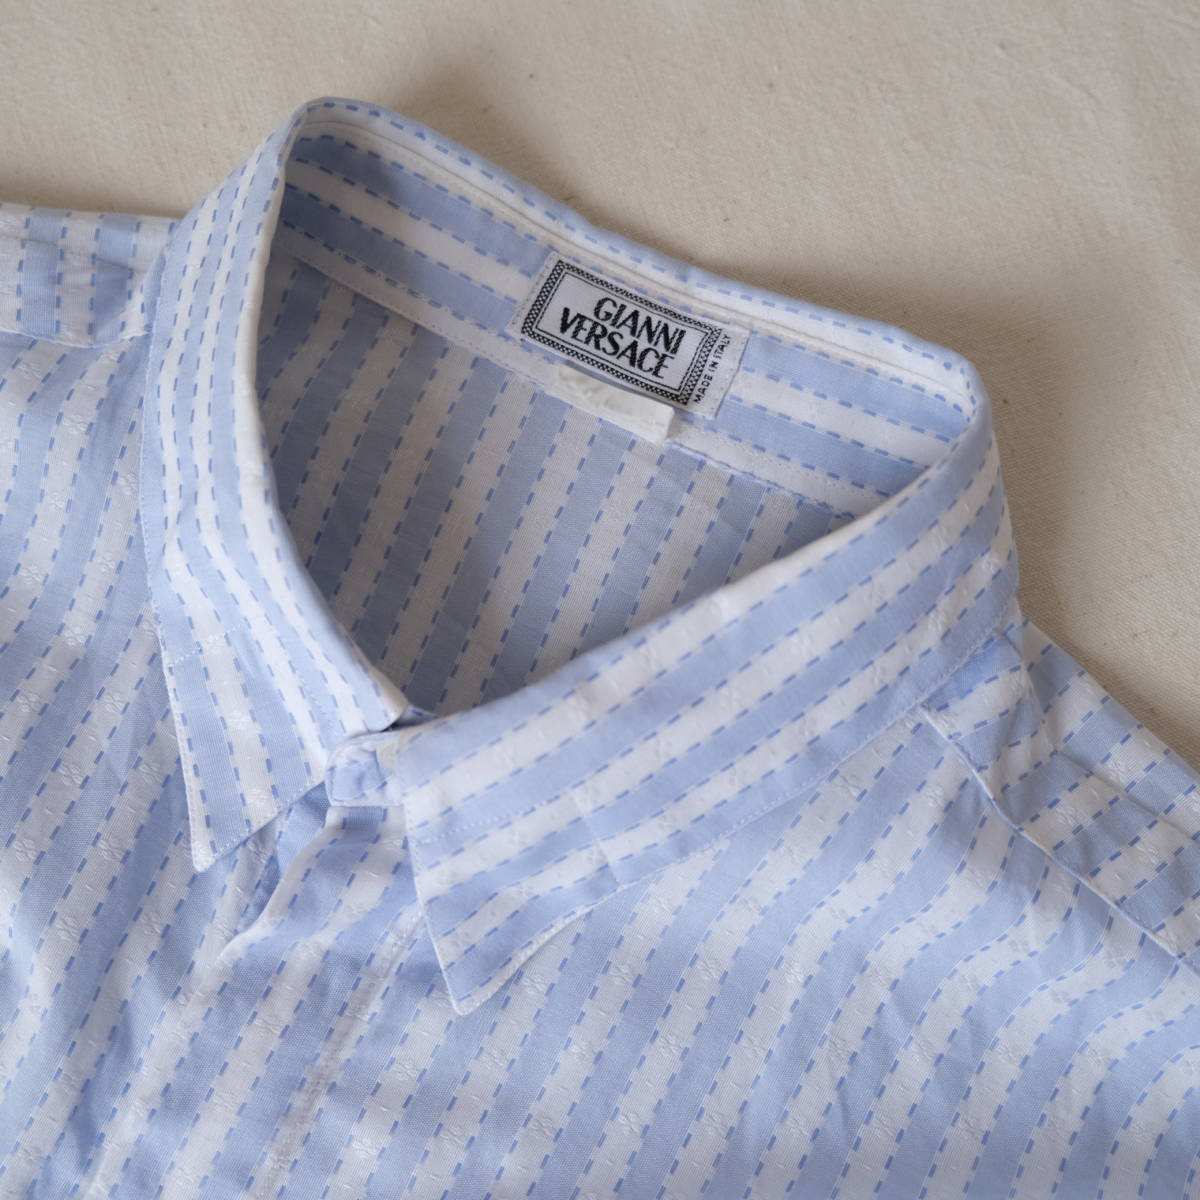 [ GIANNI VERSACE ]# Gianni Versace stripe long sleeve shirt / light blue white light blue white / 52 / Italy made Vintage 